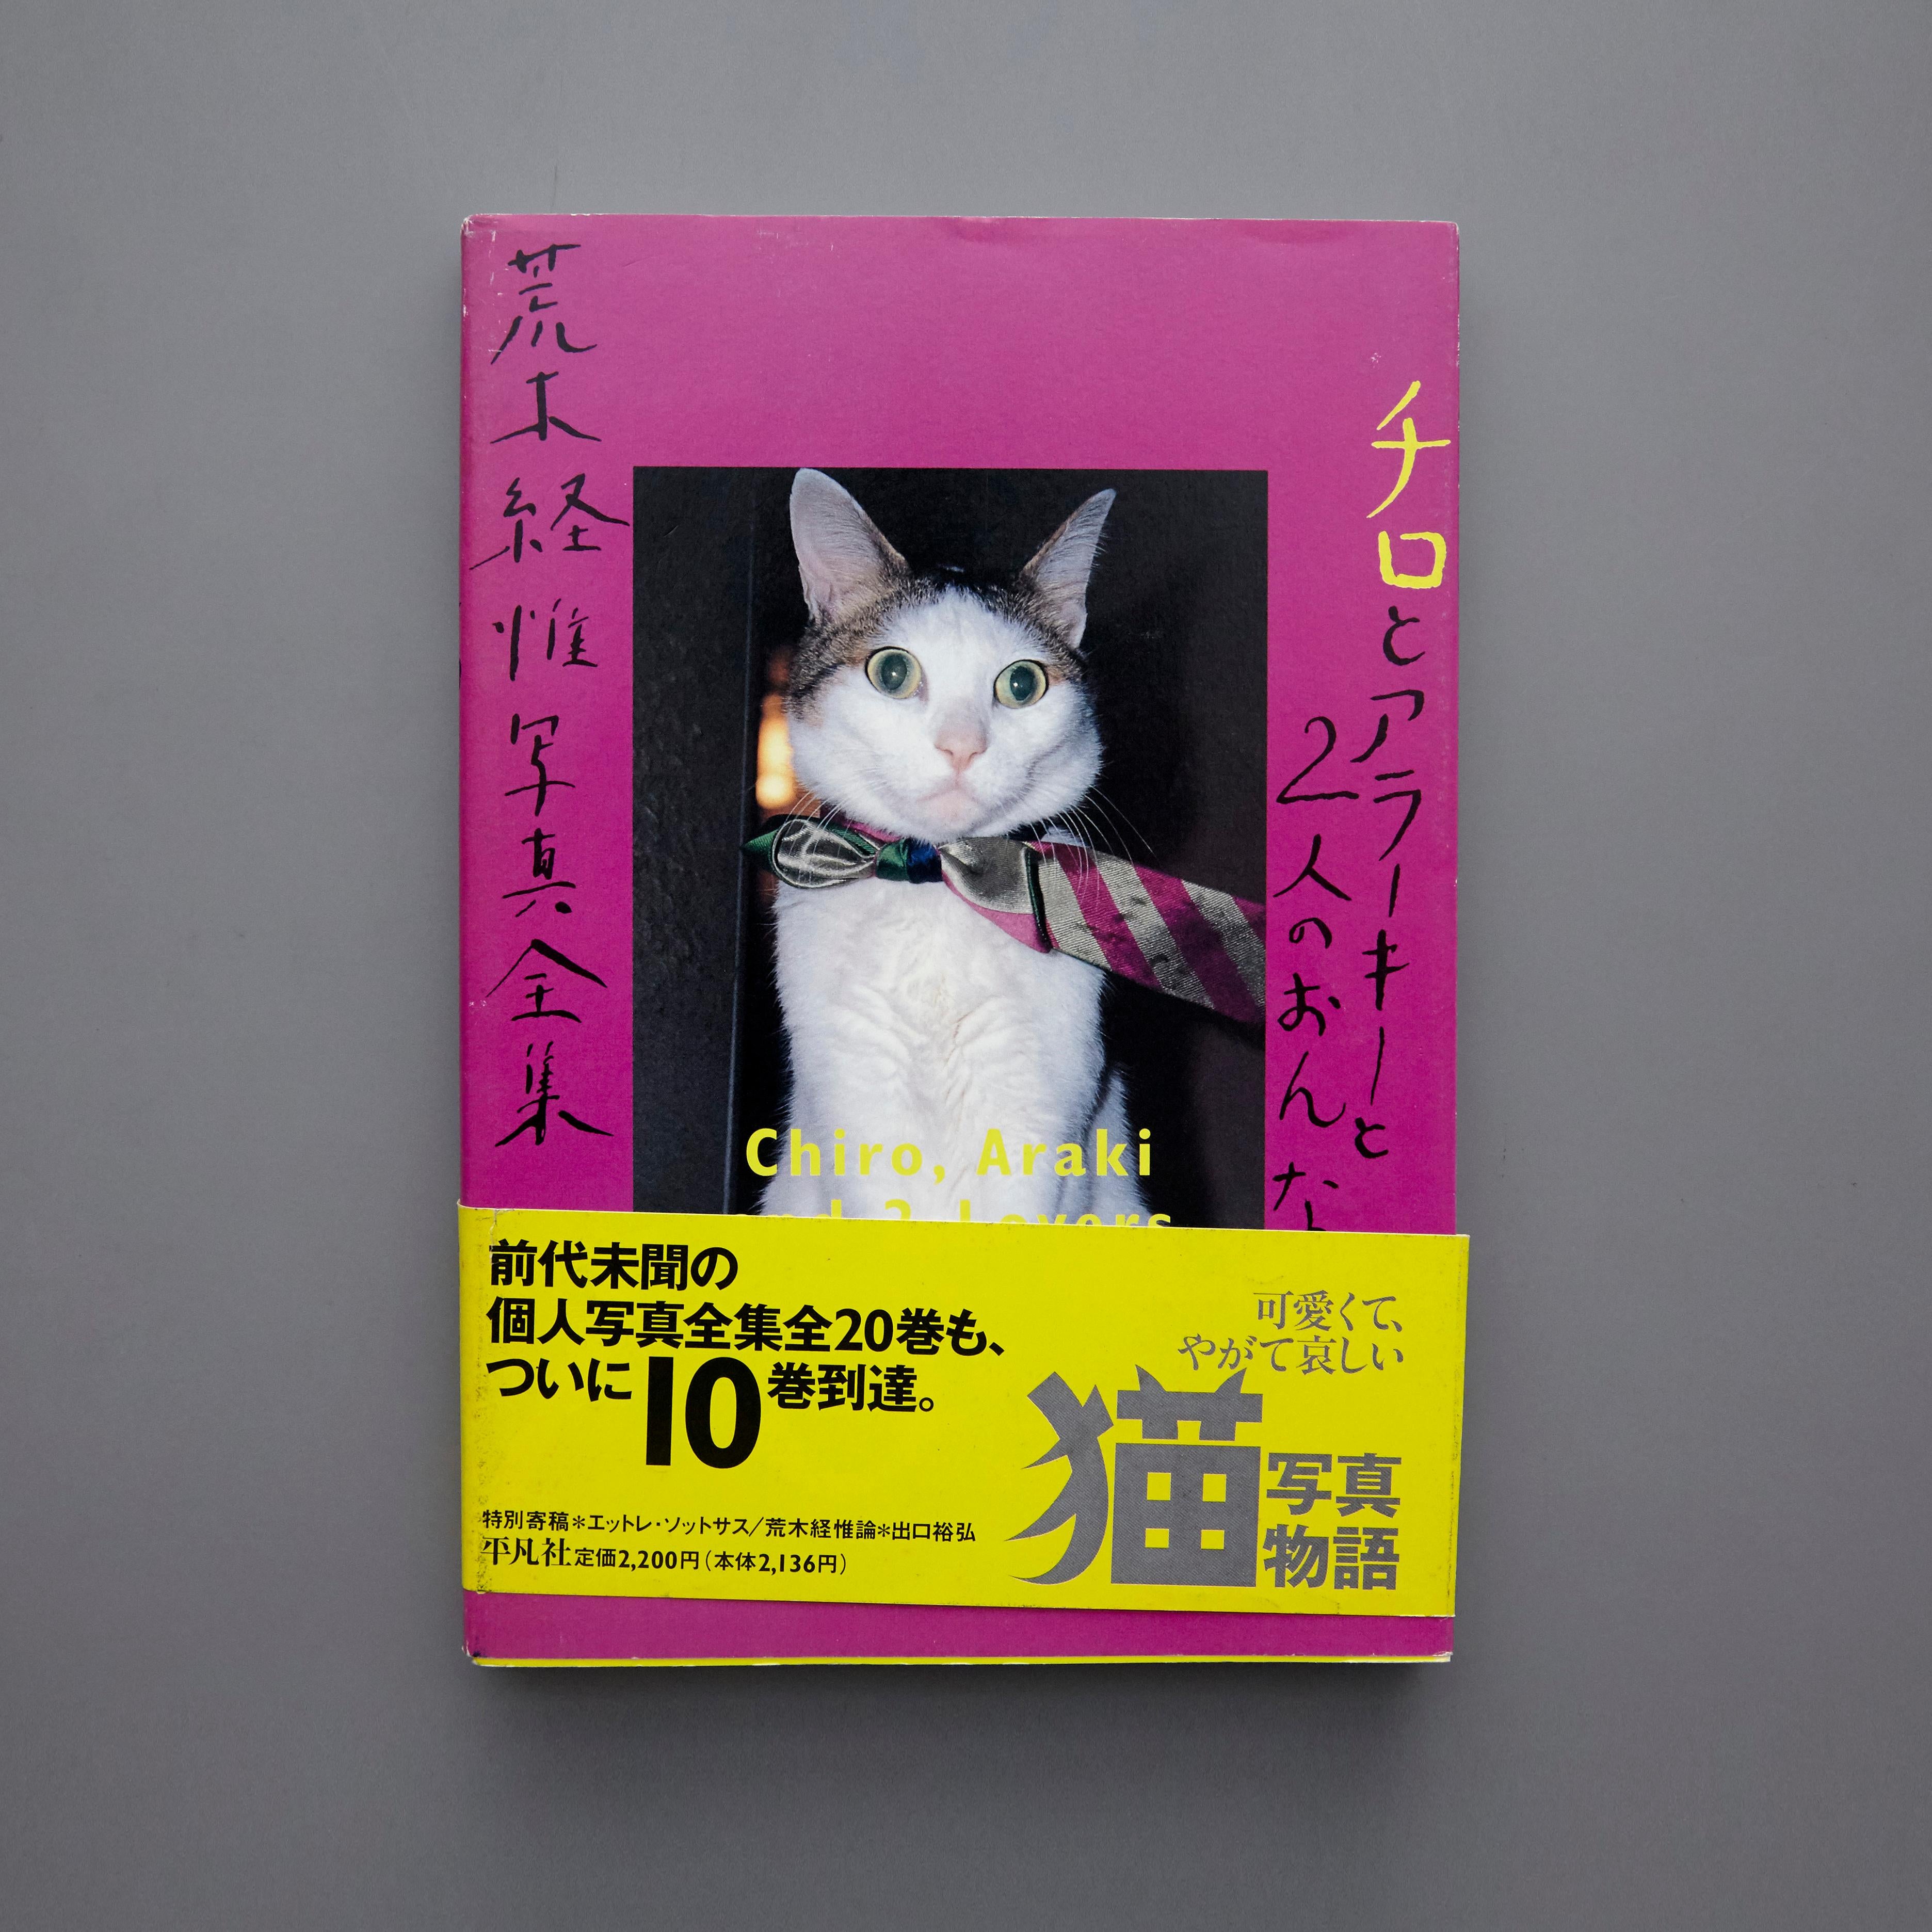 Works of Nobuyoshi Araki Book Collection Complete 1-20 3